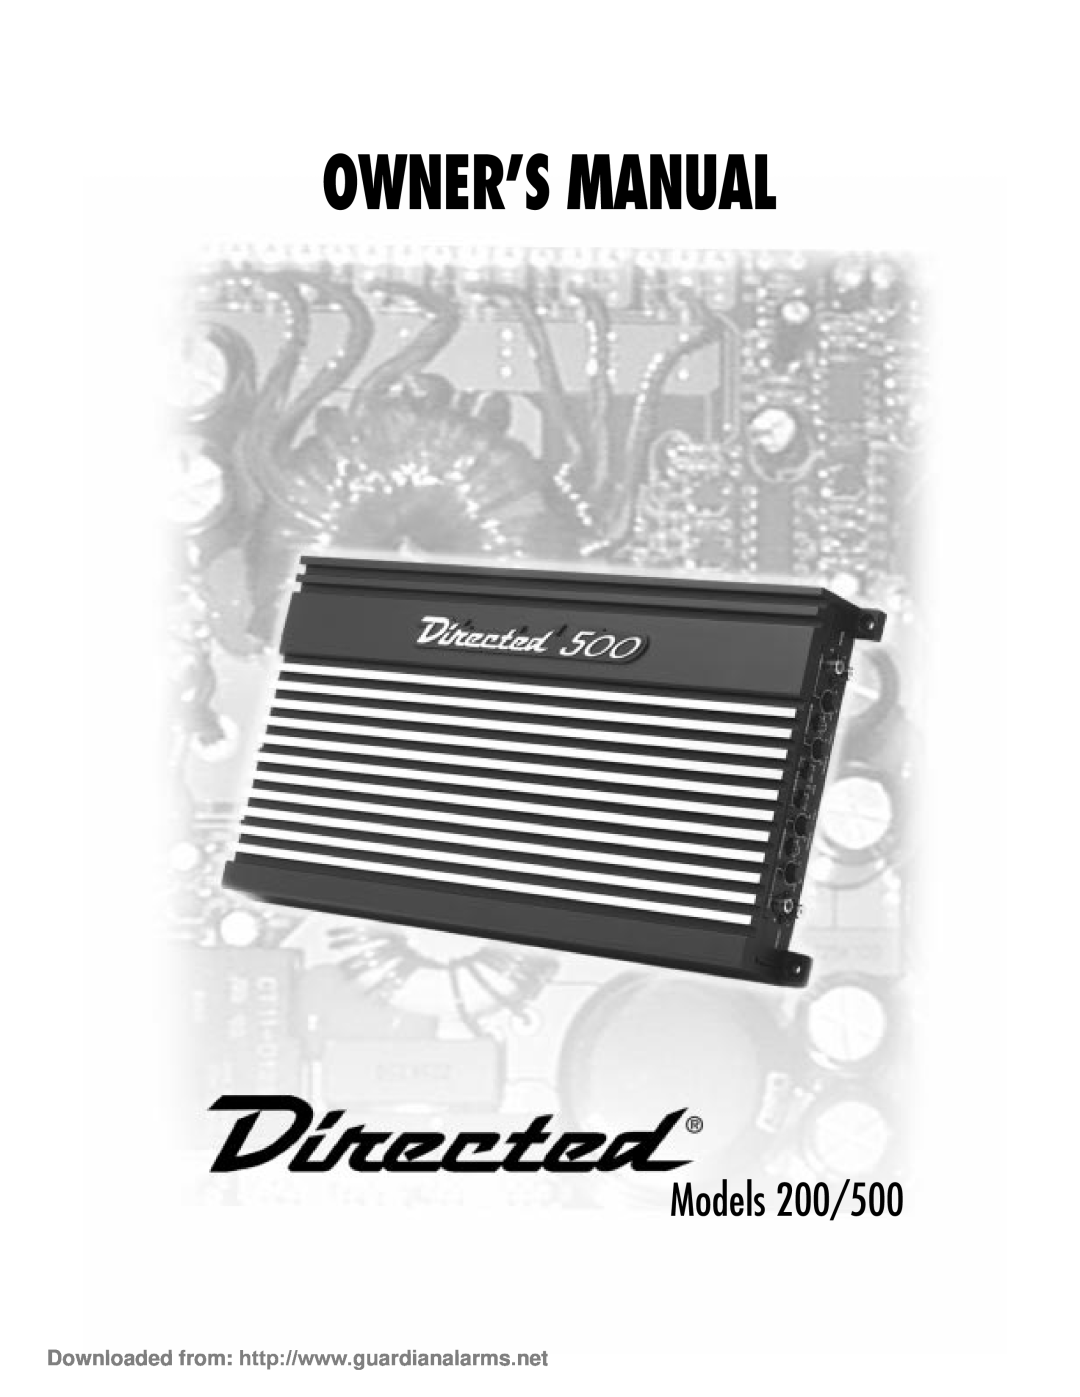 Directed Electronics owner manual Owner’S Manual, Models 200/500 